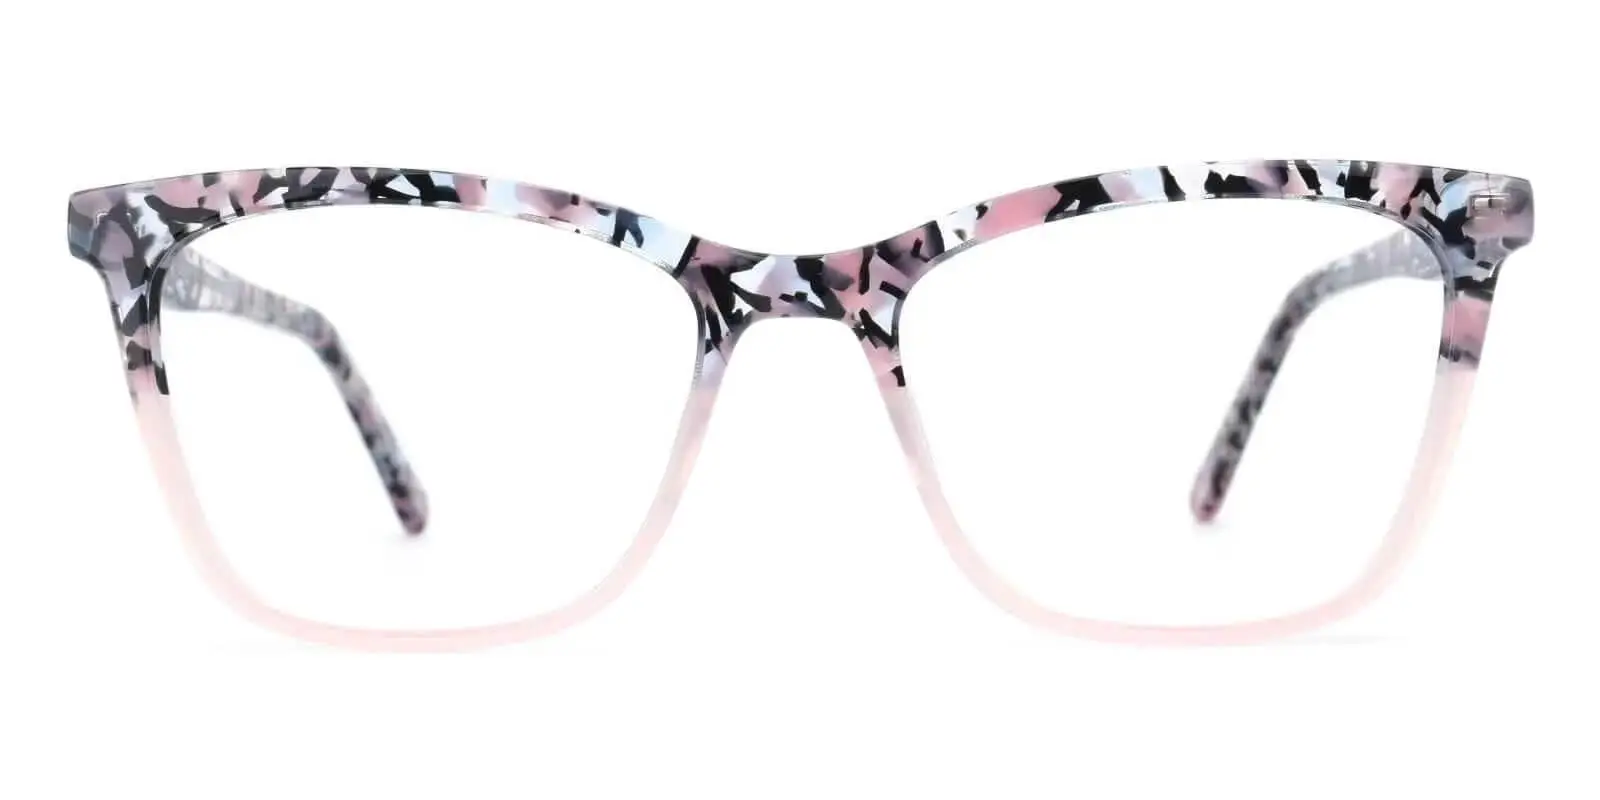 Masser Pink Acetate Eyeglasses , UniversalBridgeFit Frames from ABBE Glasses